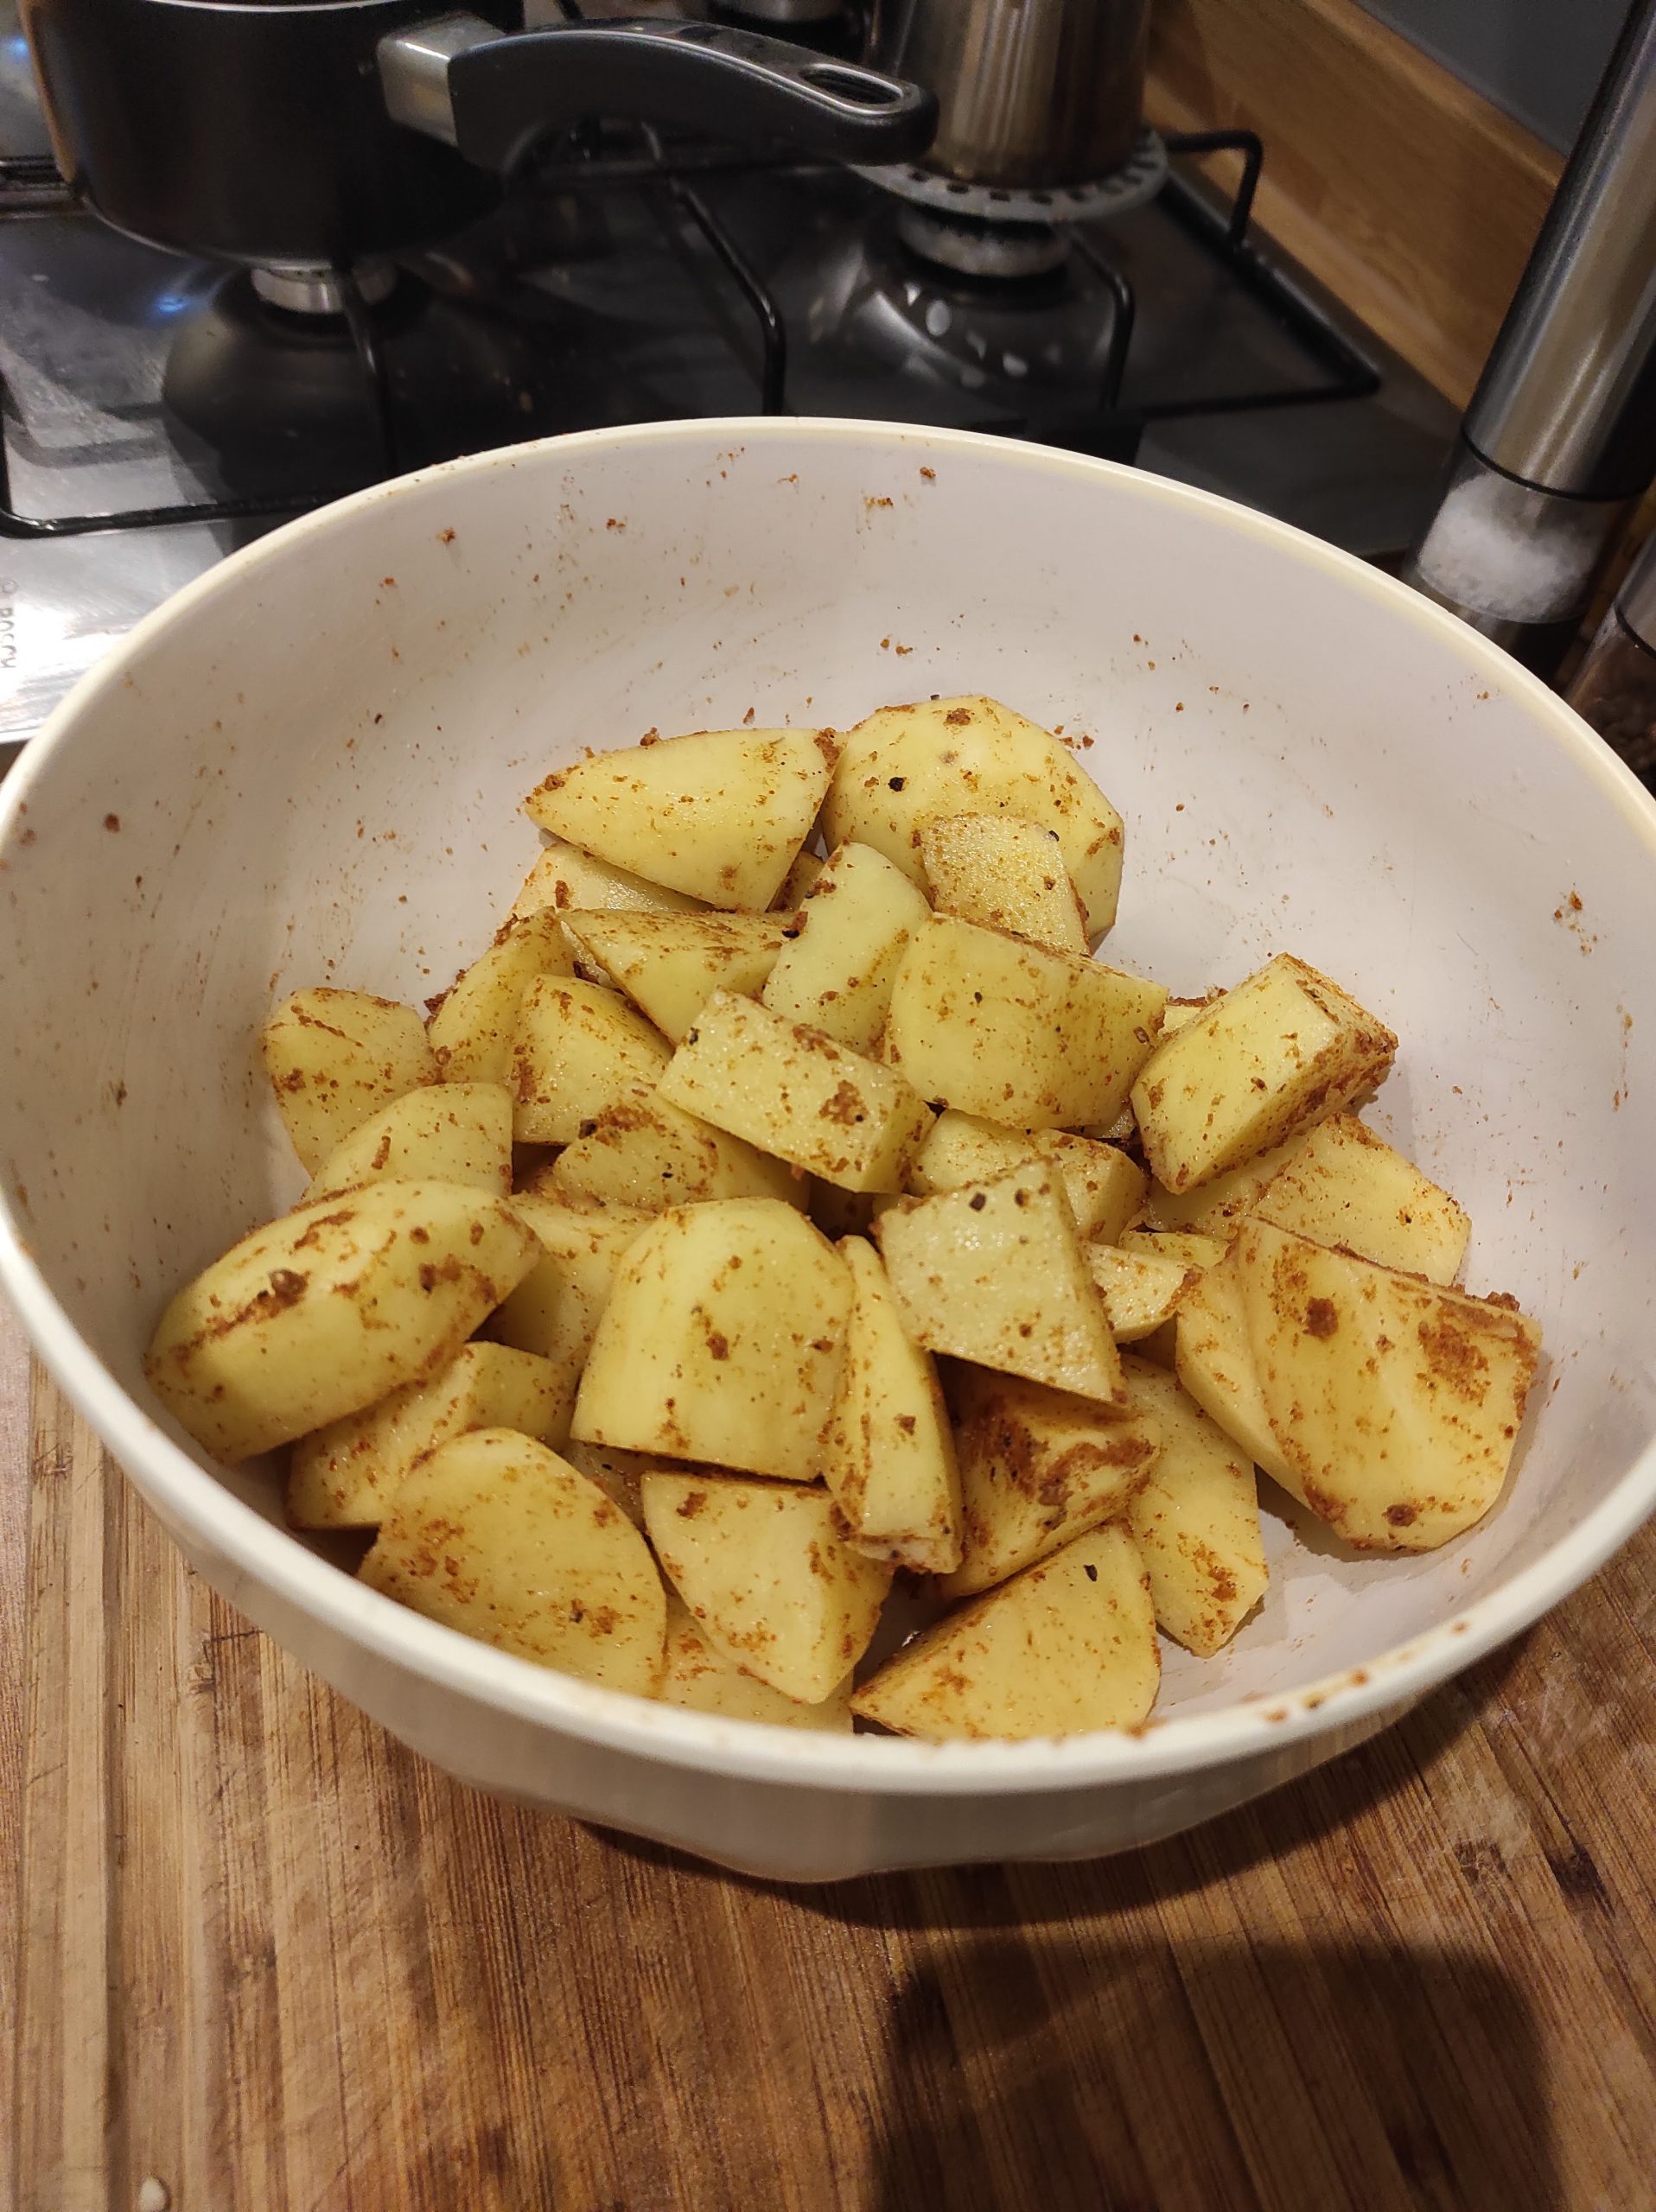 Mix air fryer potatoes